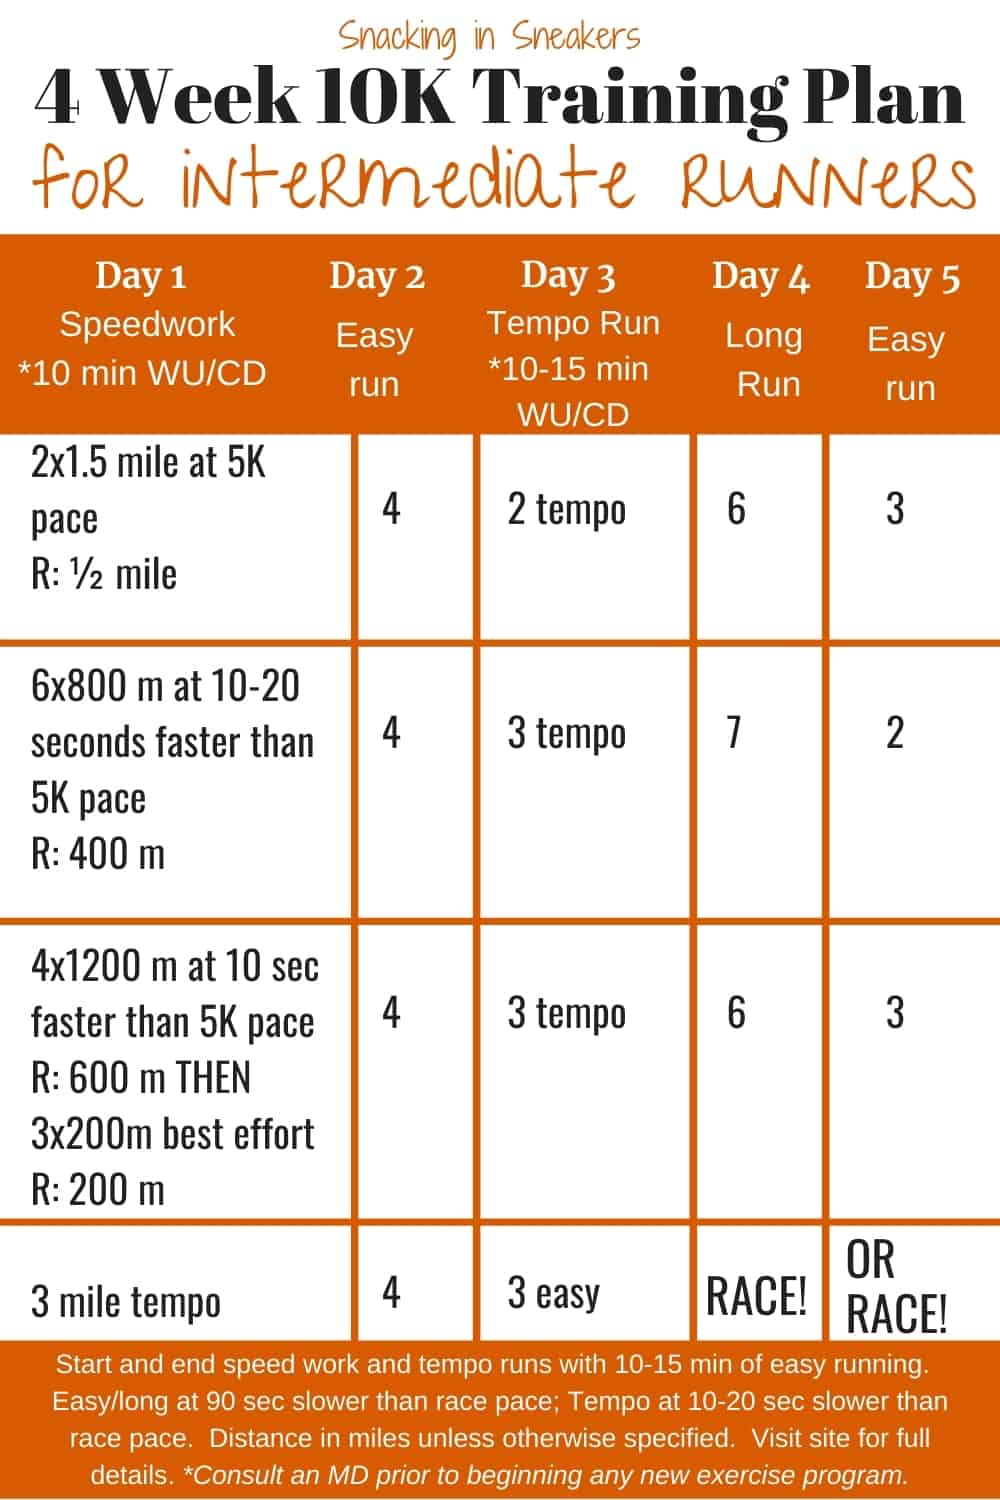 4 Week 10K training plan chart for intermediate runners.